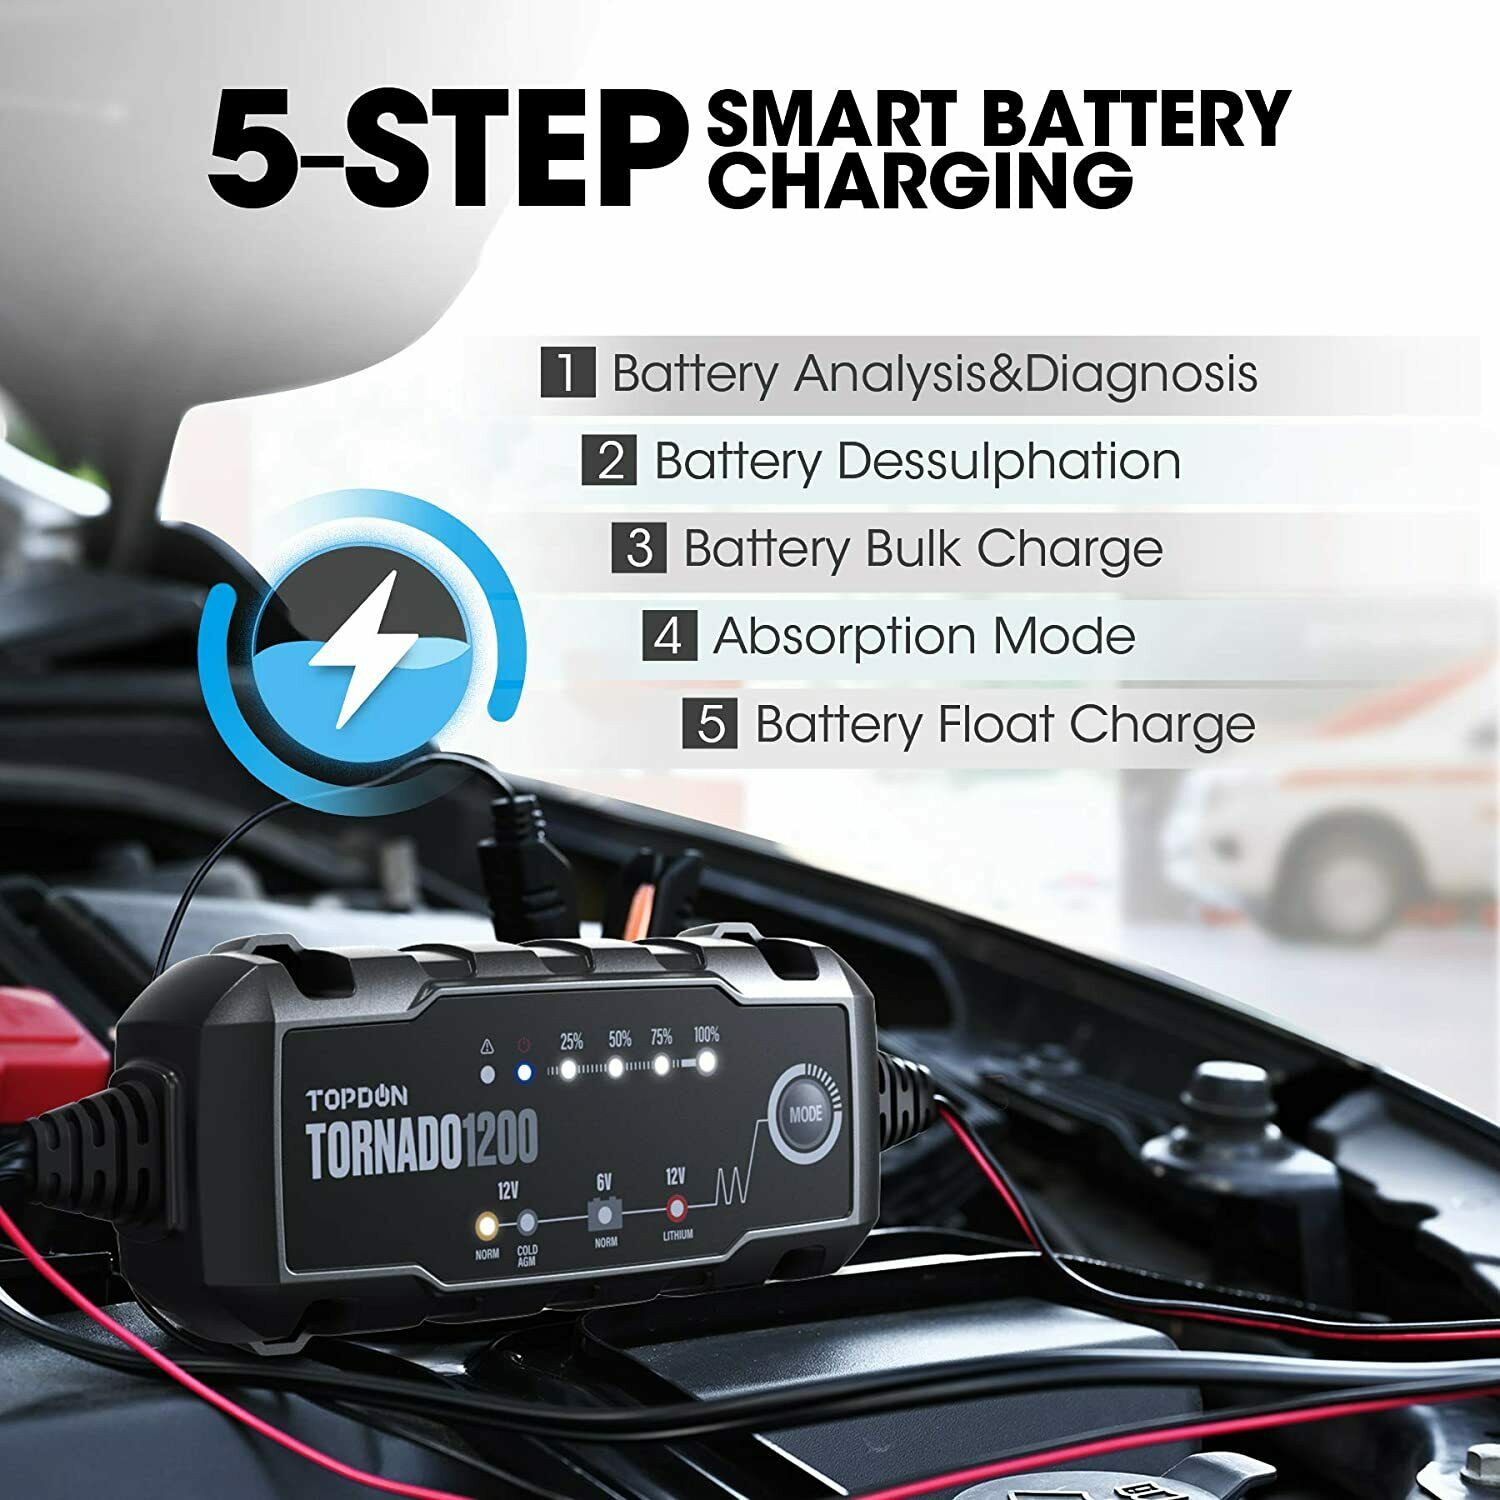 Topdon Car Battery Charger Trickle Charger TOPDON TORNADO1200 6V 12V 1.2 Amp Portable Smart Battery Charger & Maintainer Desulfator